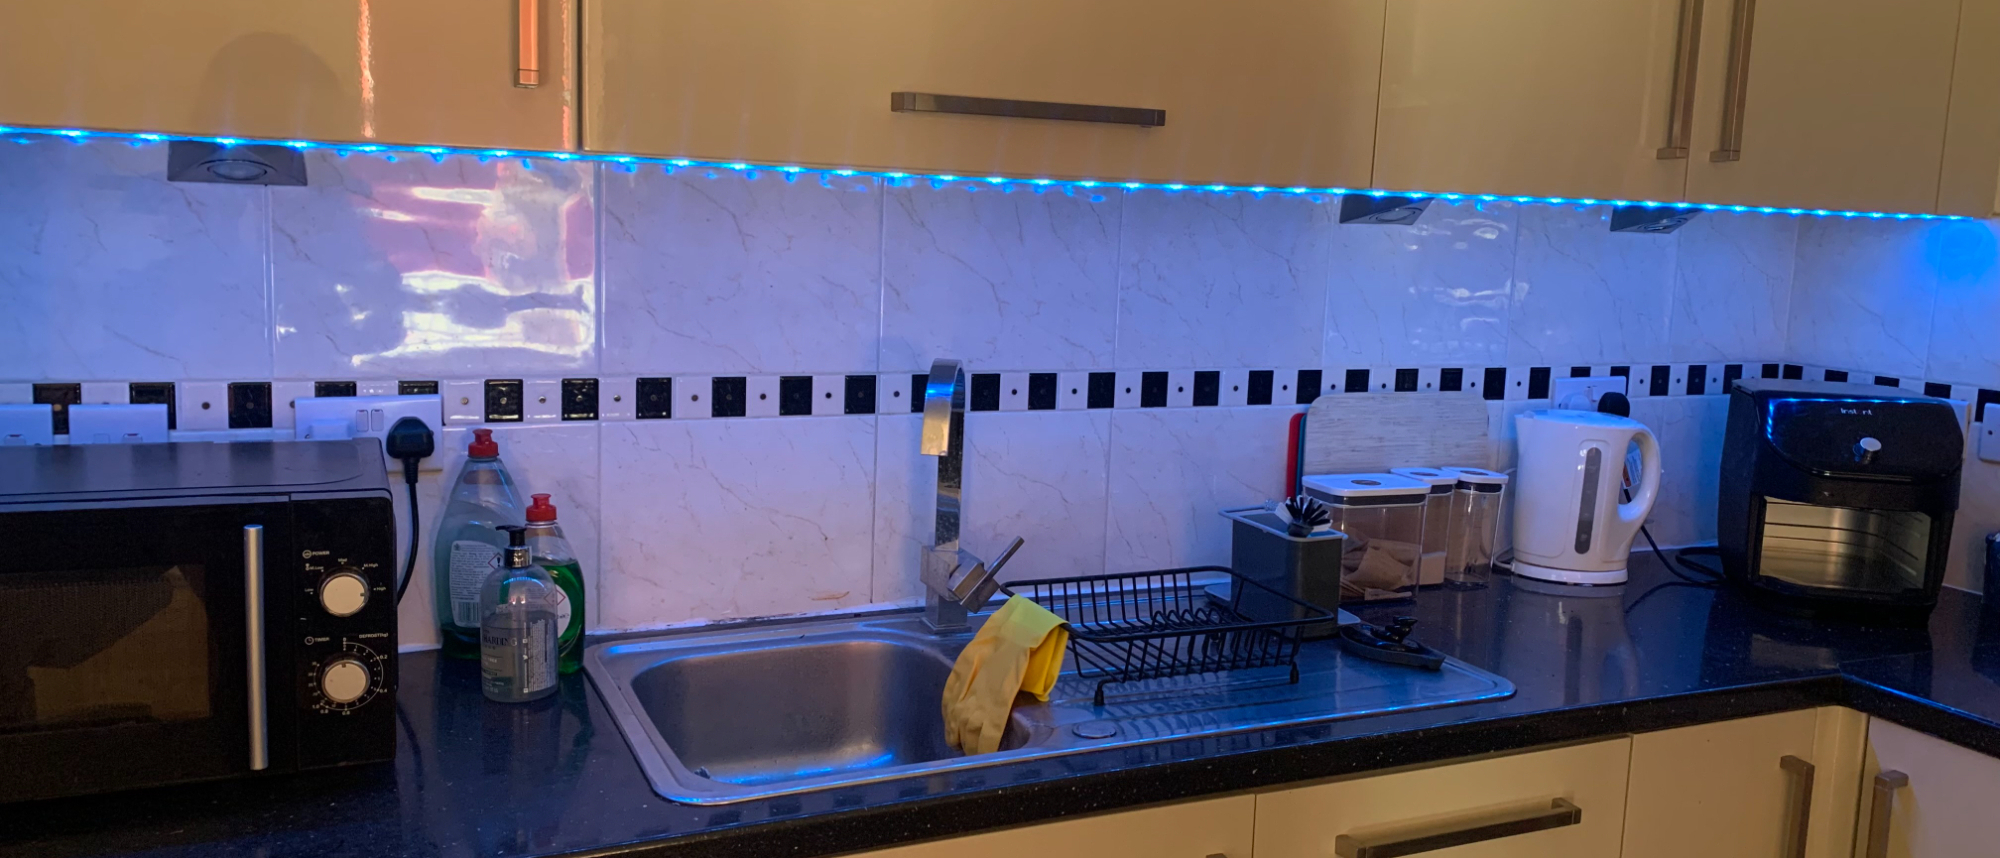 WiZ LED strip smart light review: brilliant, bright and budget-friendly |  TechRadar